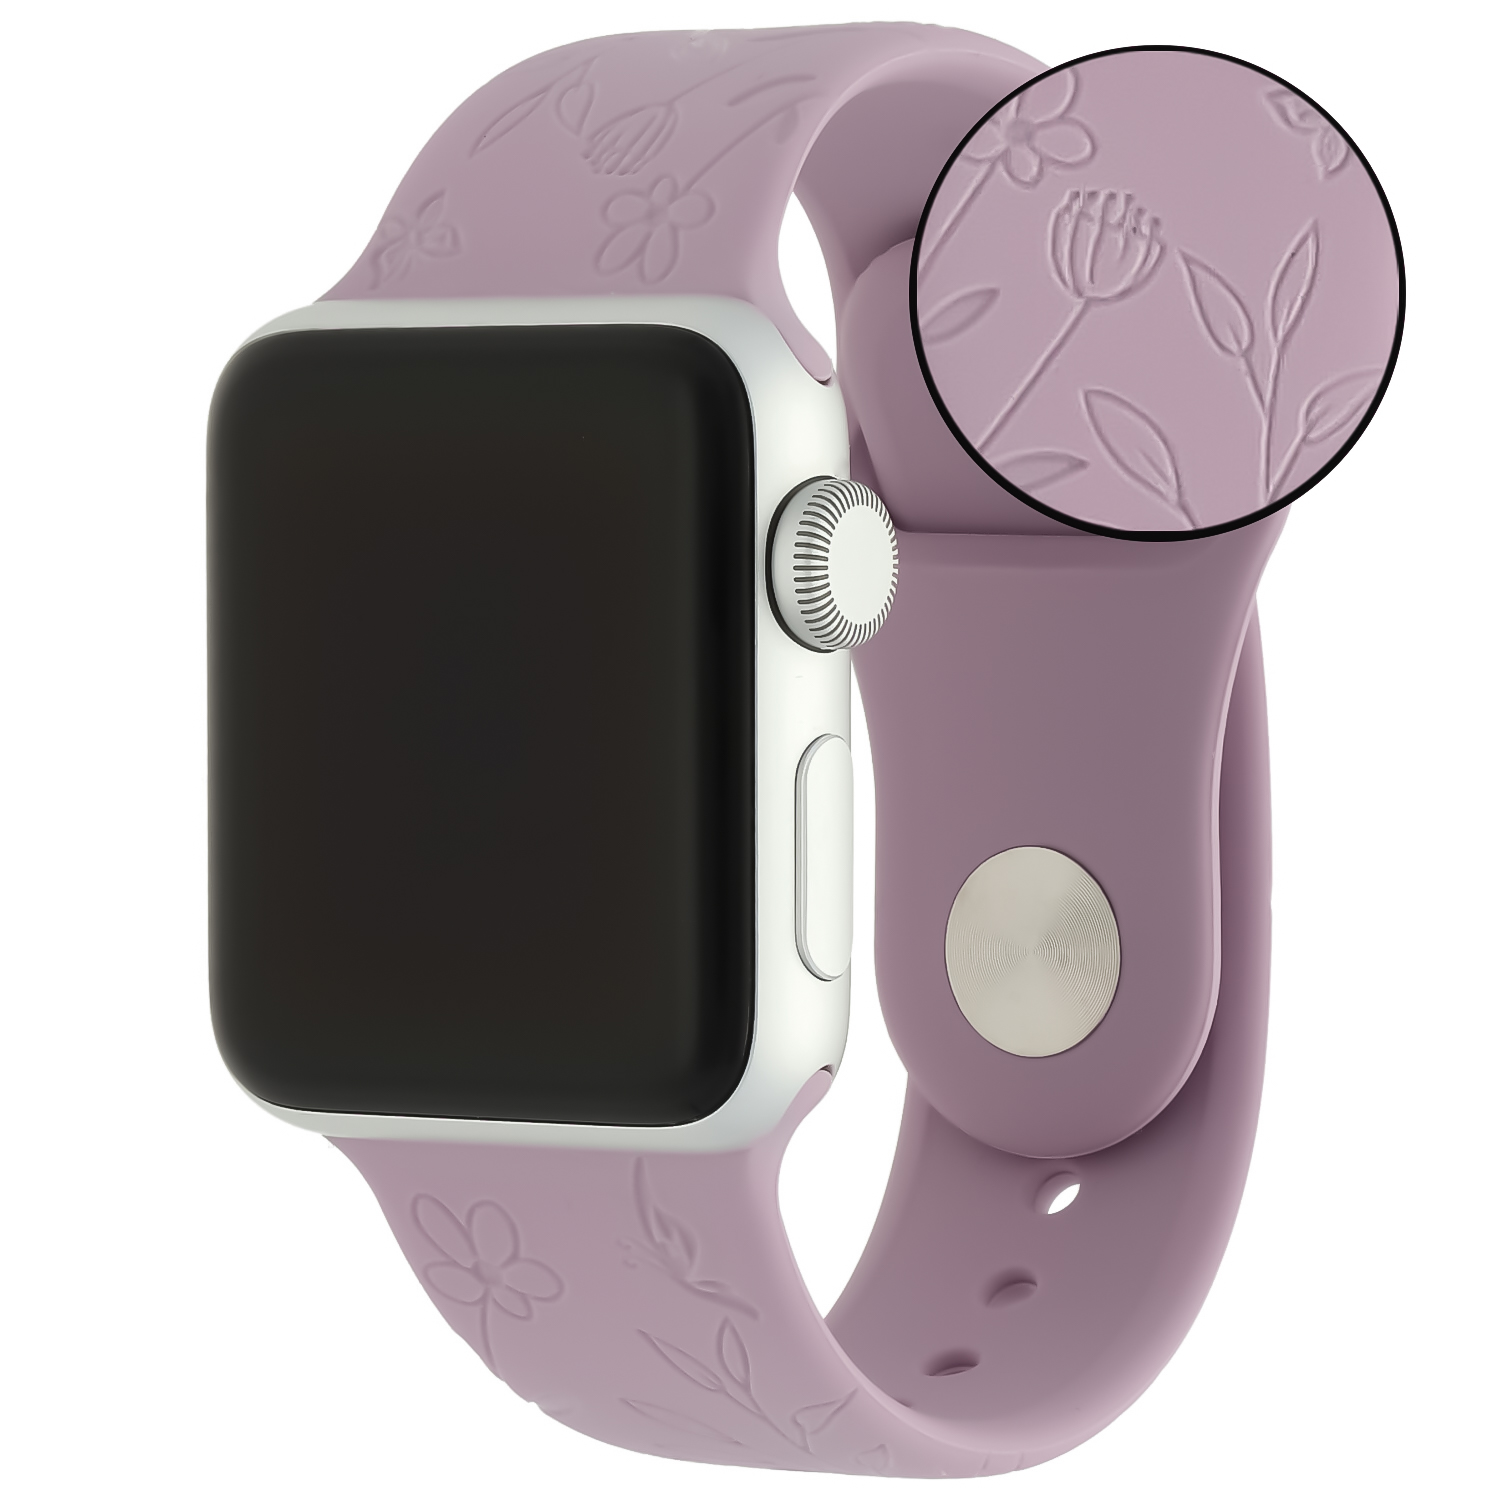 Cinturino sport con stampa per Apple Watch - viola floreale